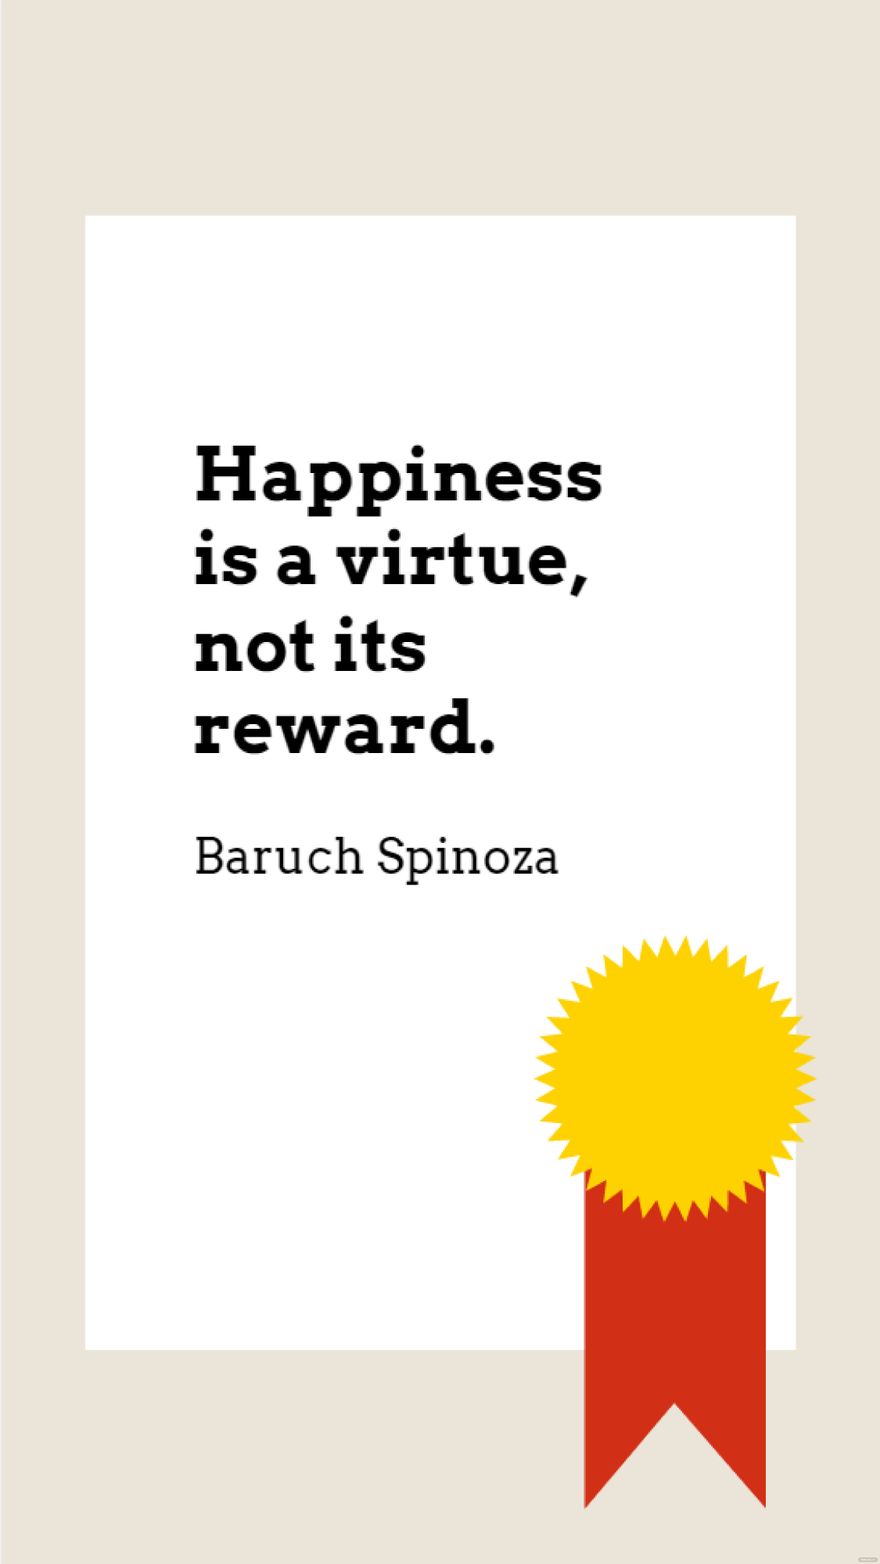 Baruch Spinoza - Happiness is a virtue, not its reward.